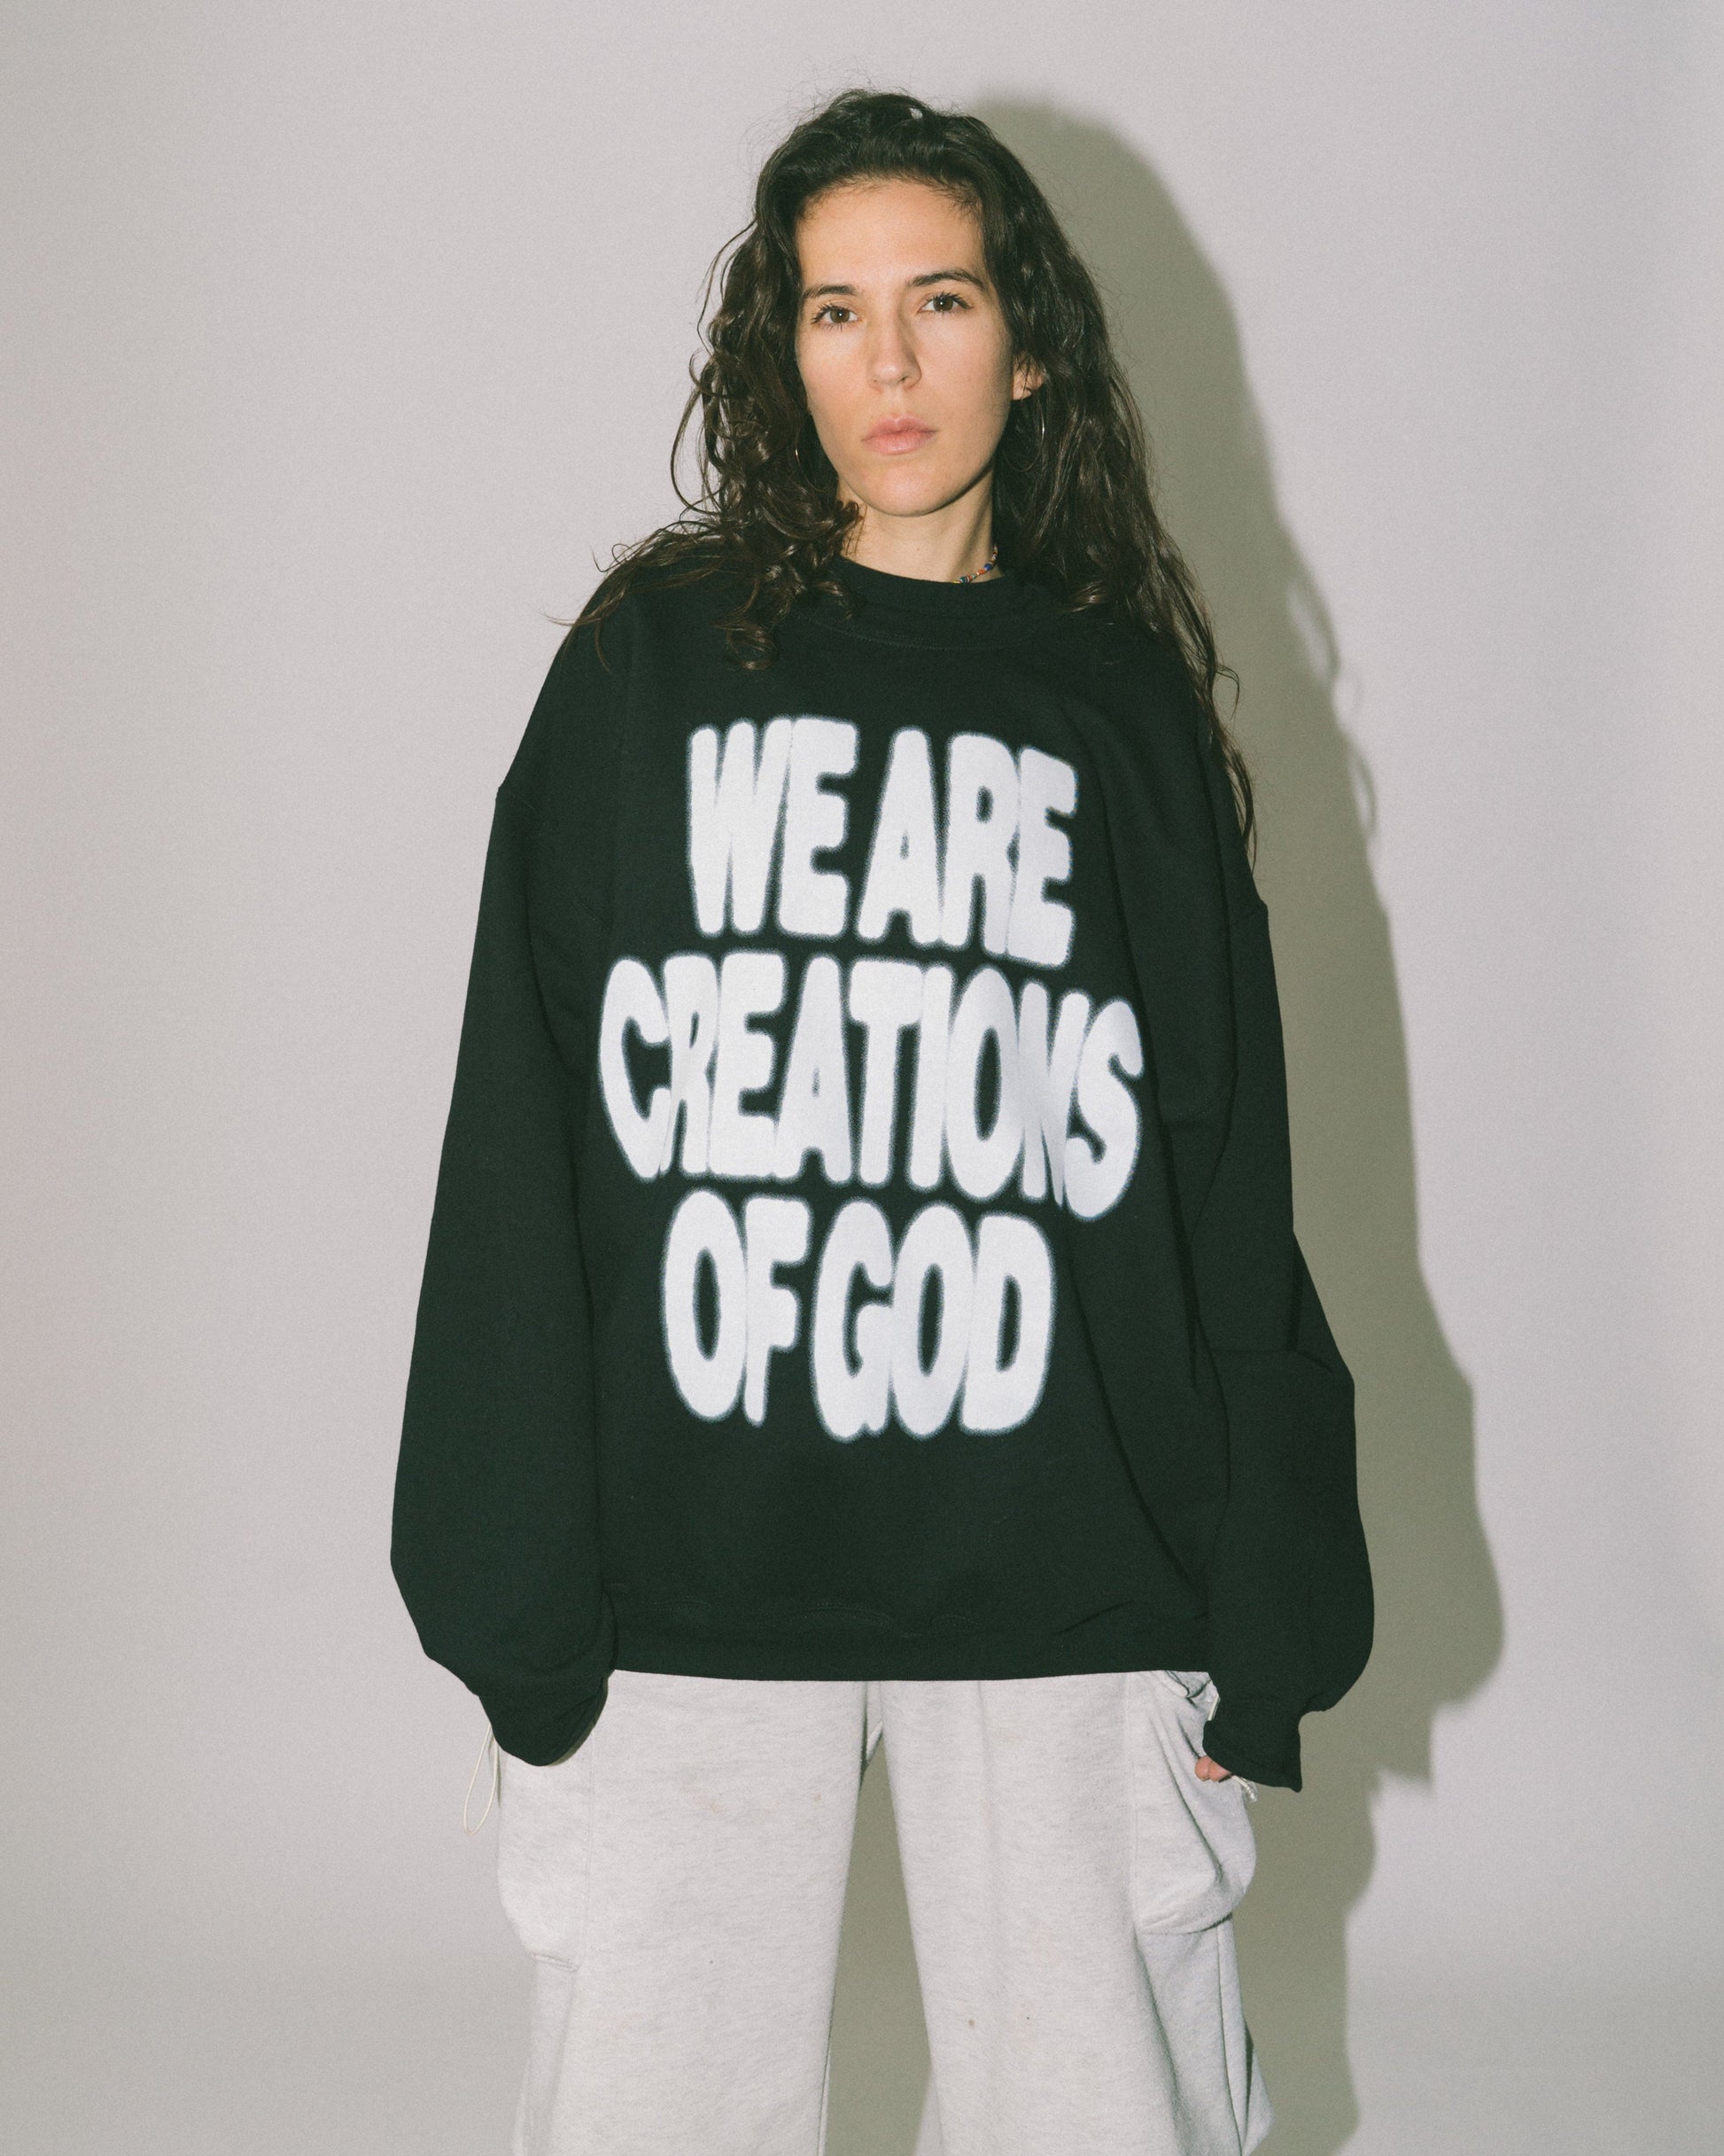 We are creations of God black crew sweatshirt by NHIM Apparel Christian clothing brand